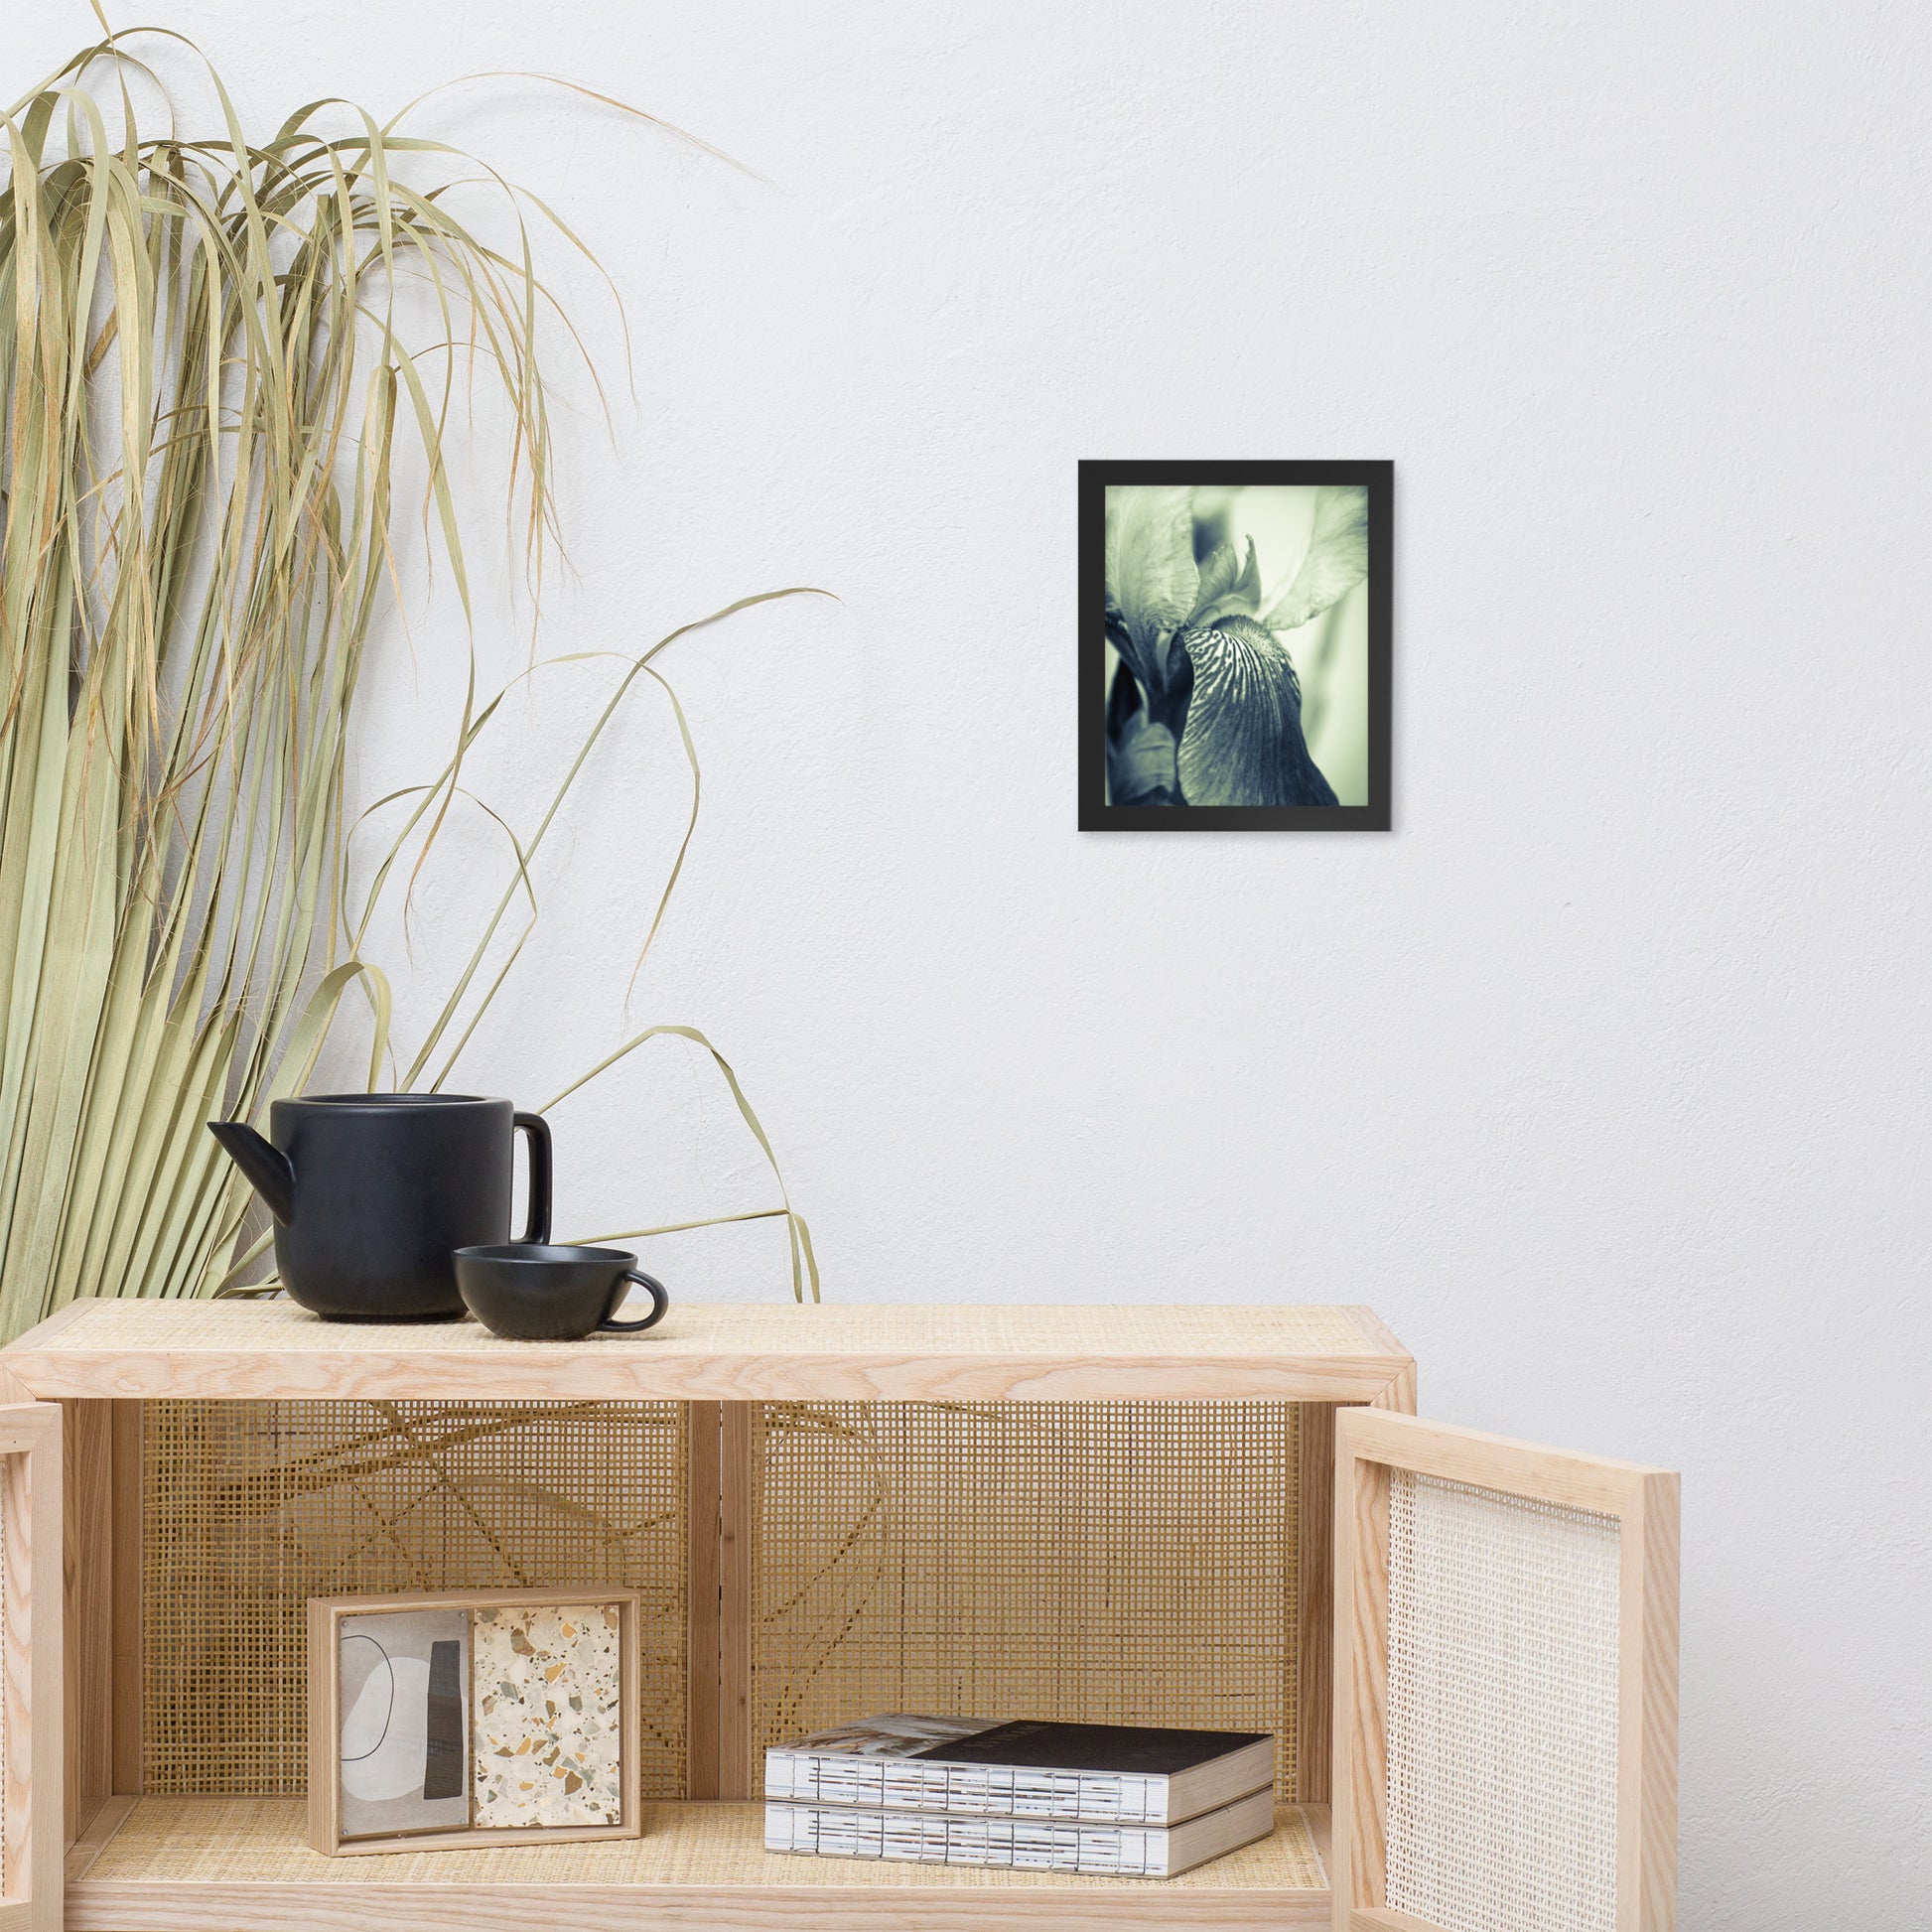 Best Art For Dining Room: Abstract Japanese Iris Delight- Botanical / Floral / Flora / Flowers / Nature Photograph Framed Wall Art Print - Artwork - Wall Decor - Home Decor